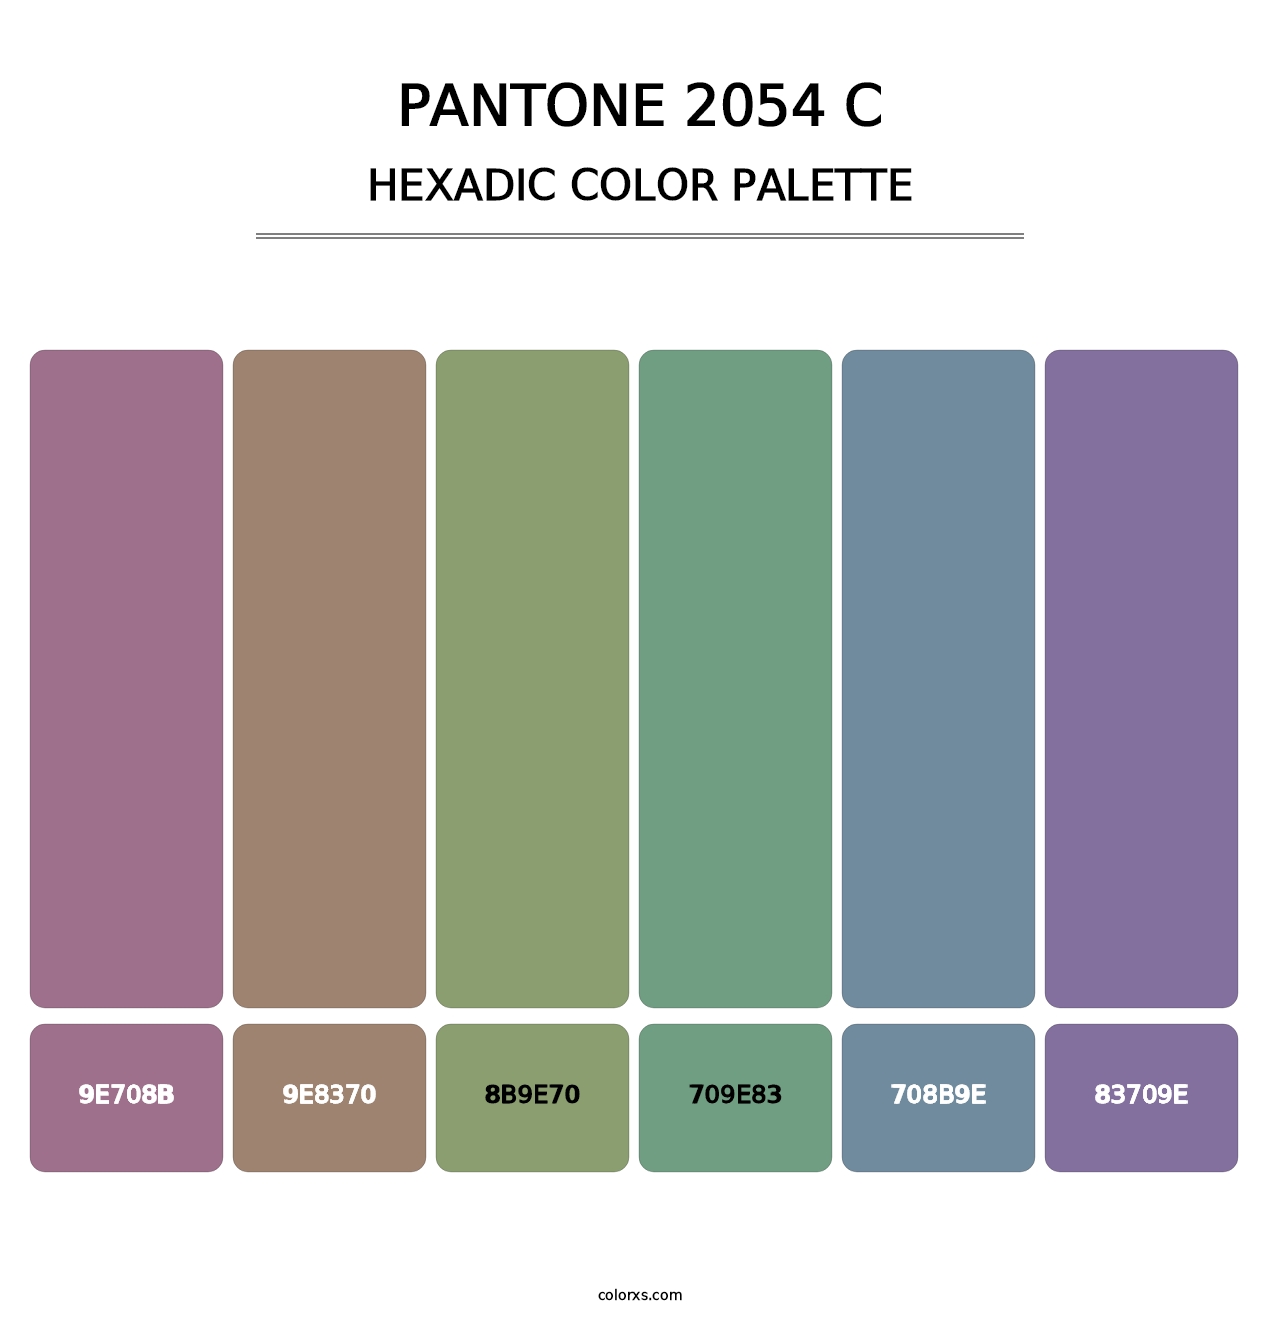 PANTONE 2054 C - Hexadic Color Palette